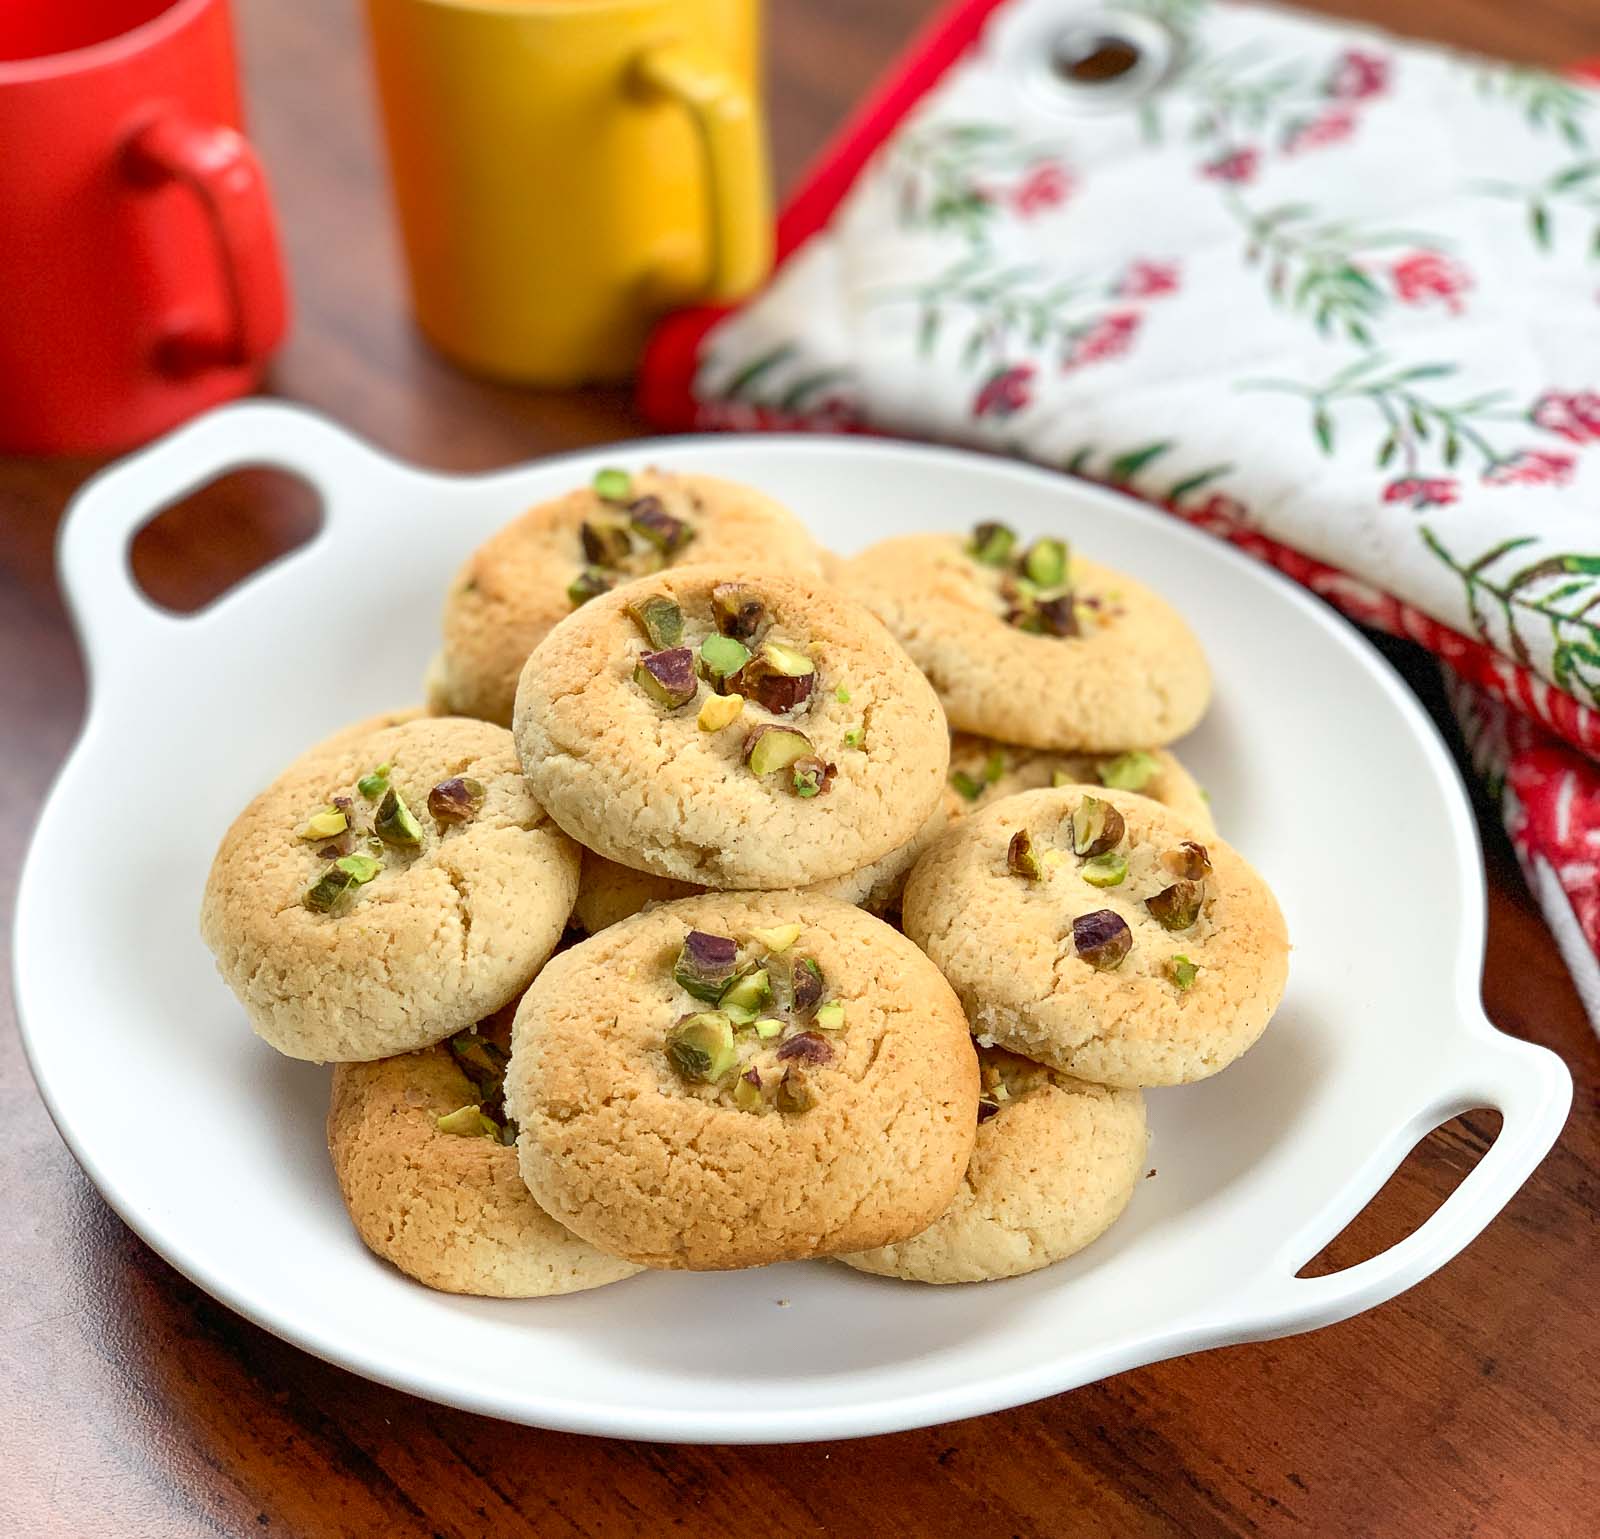 Nankhatai Recipe - A Spiced Eggless Indian Cookie